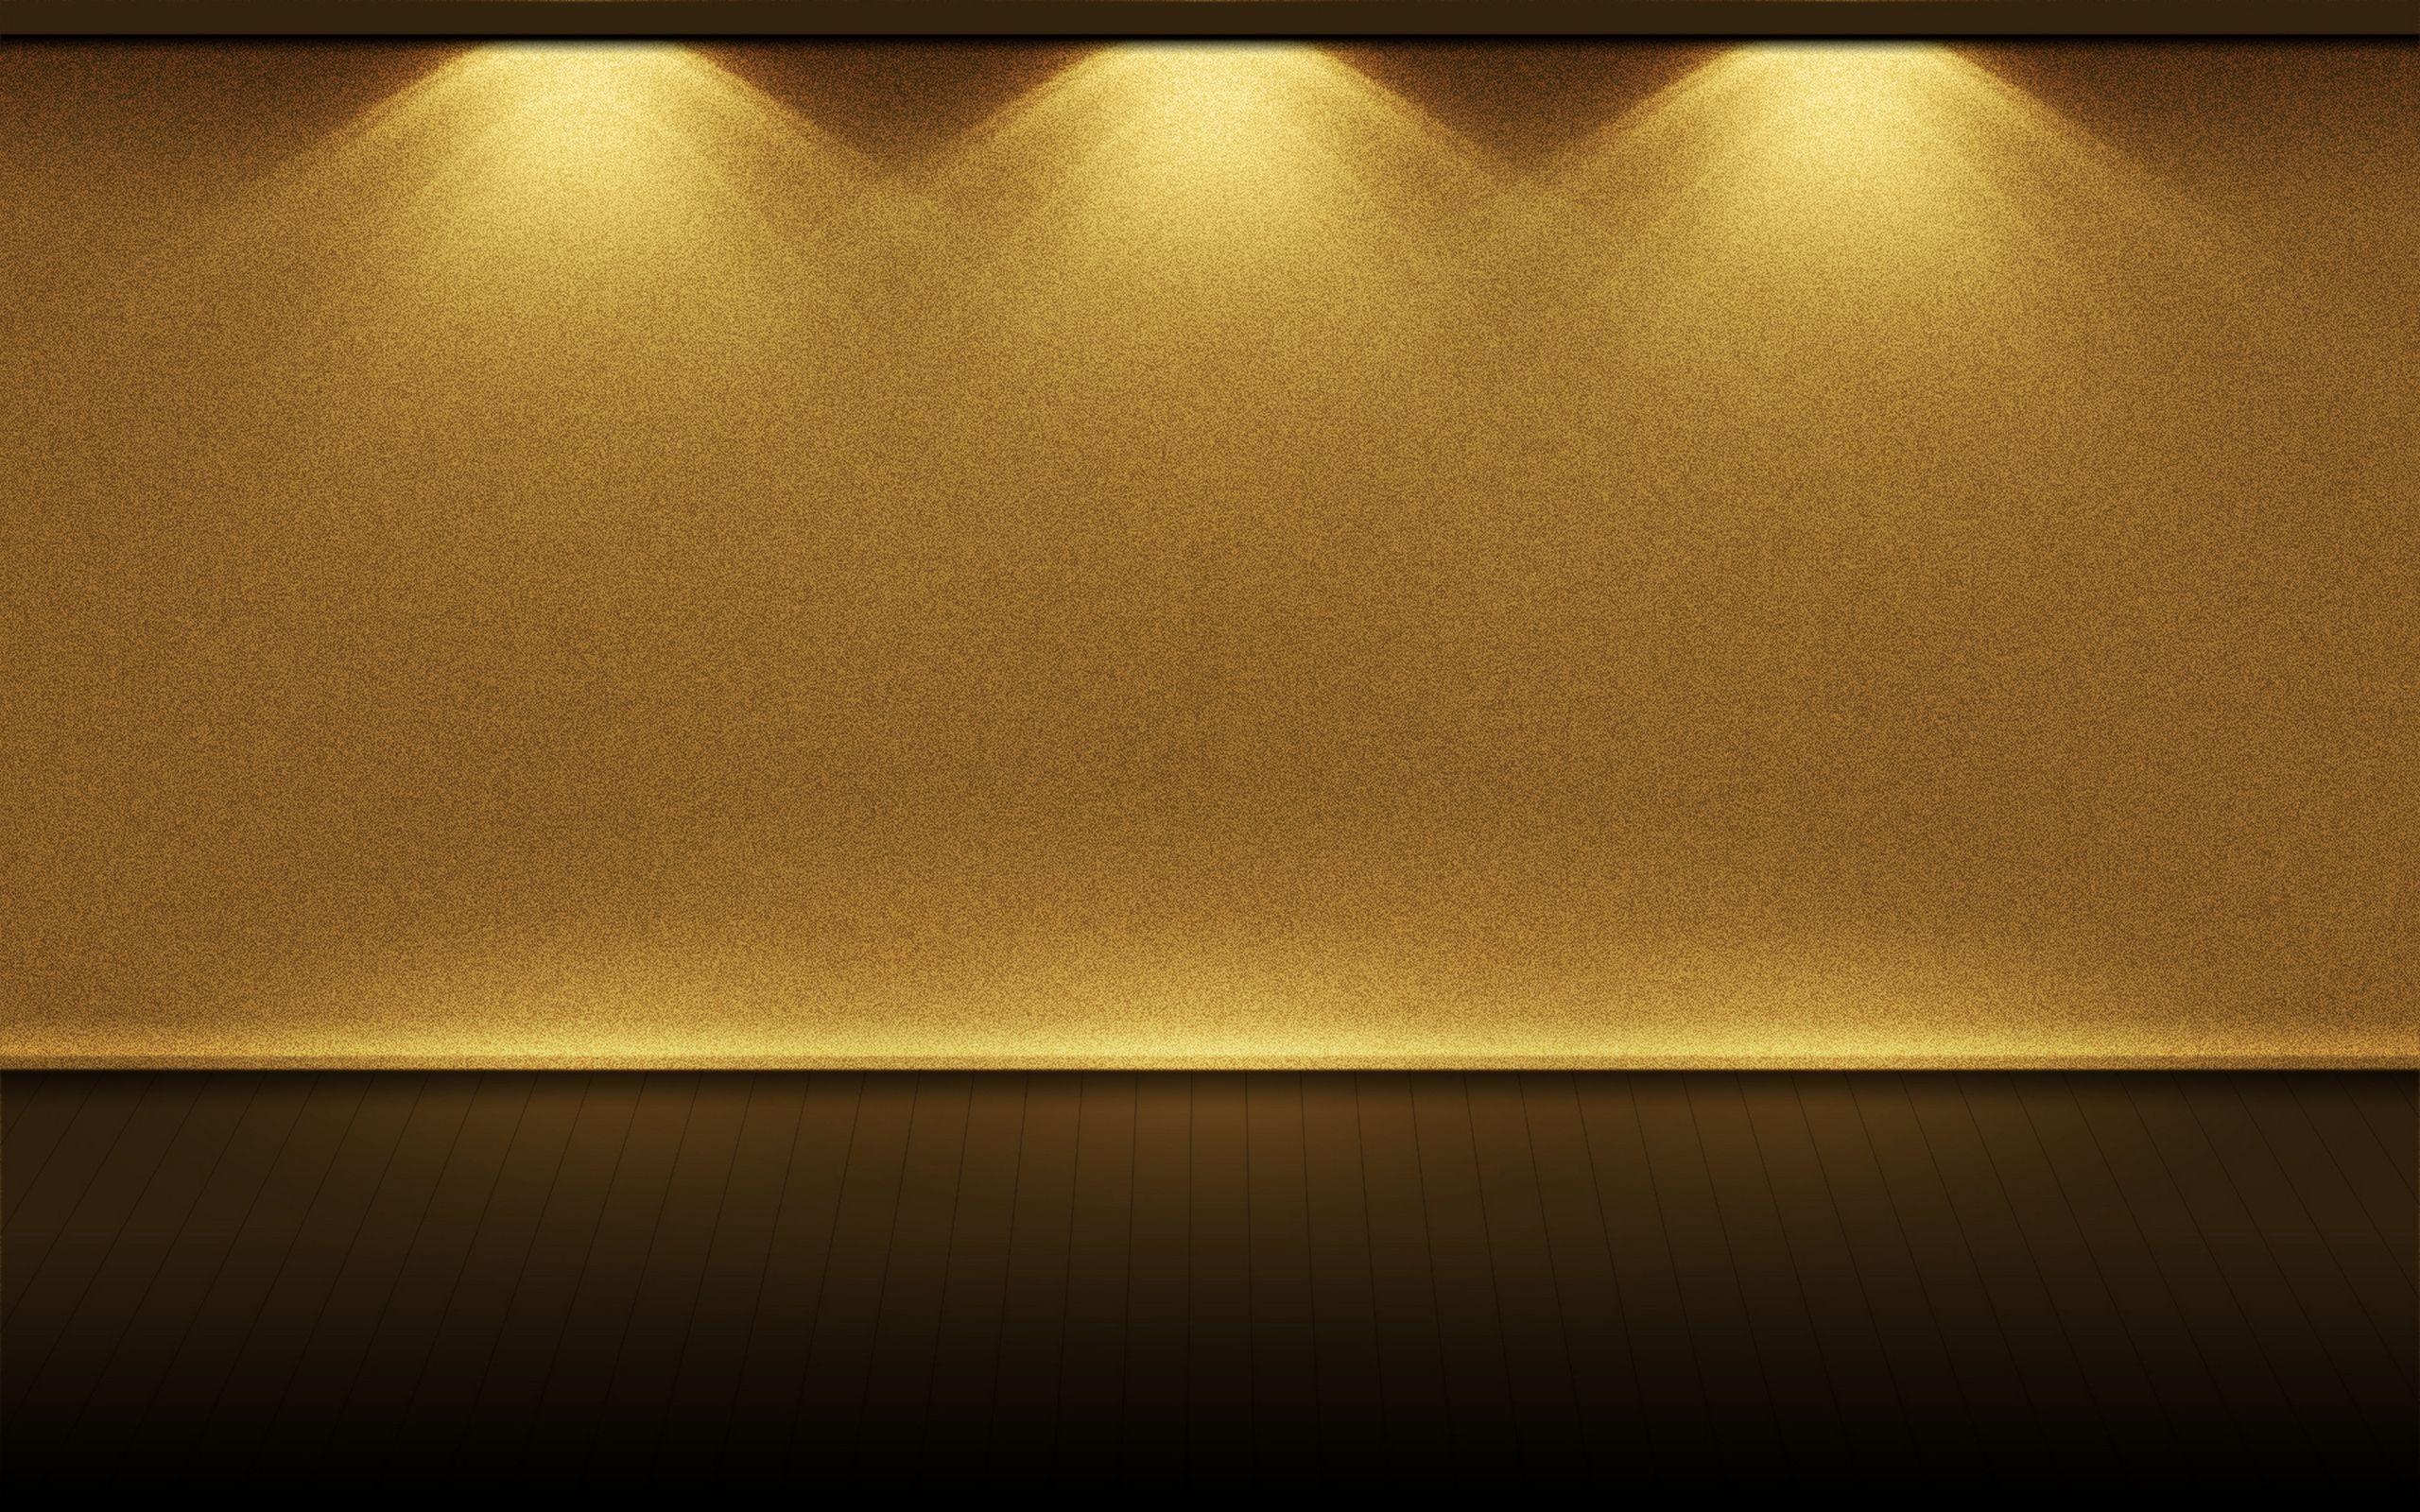 Gold Lights Wallpaper Gold Wallpaper Hd Uk For Walls Designs Bedroom